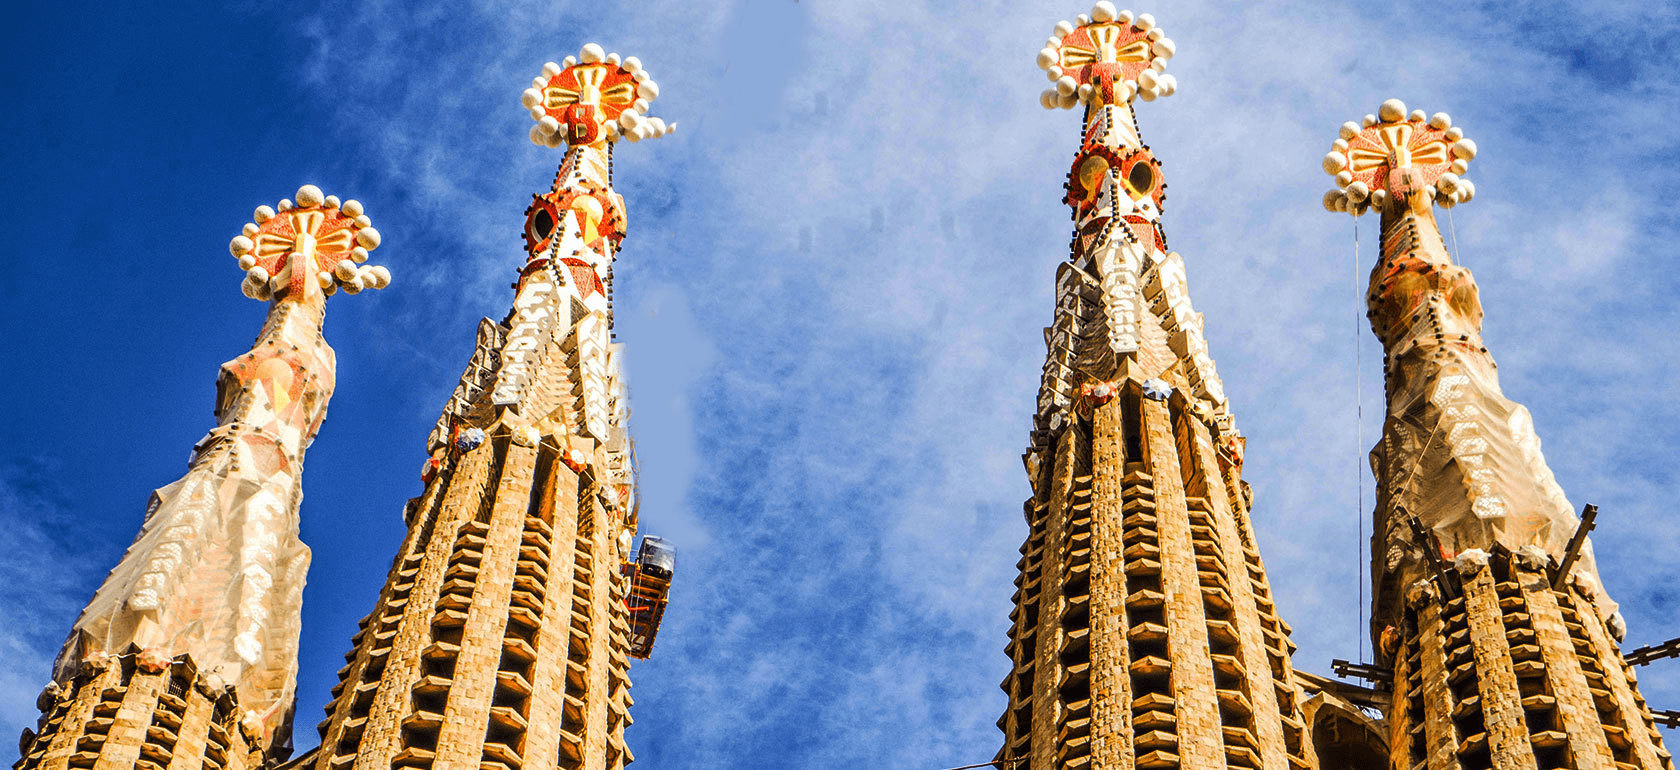 Sagrada Familia by Gaudi - Basilica in Barcelona, Spain - 137 Year Project 53